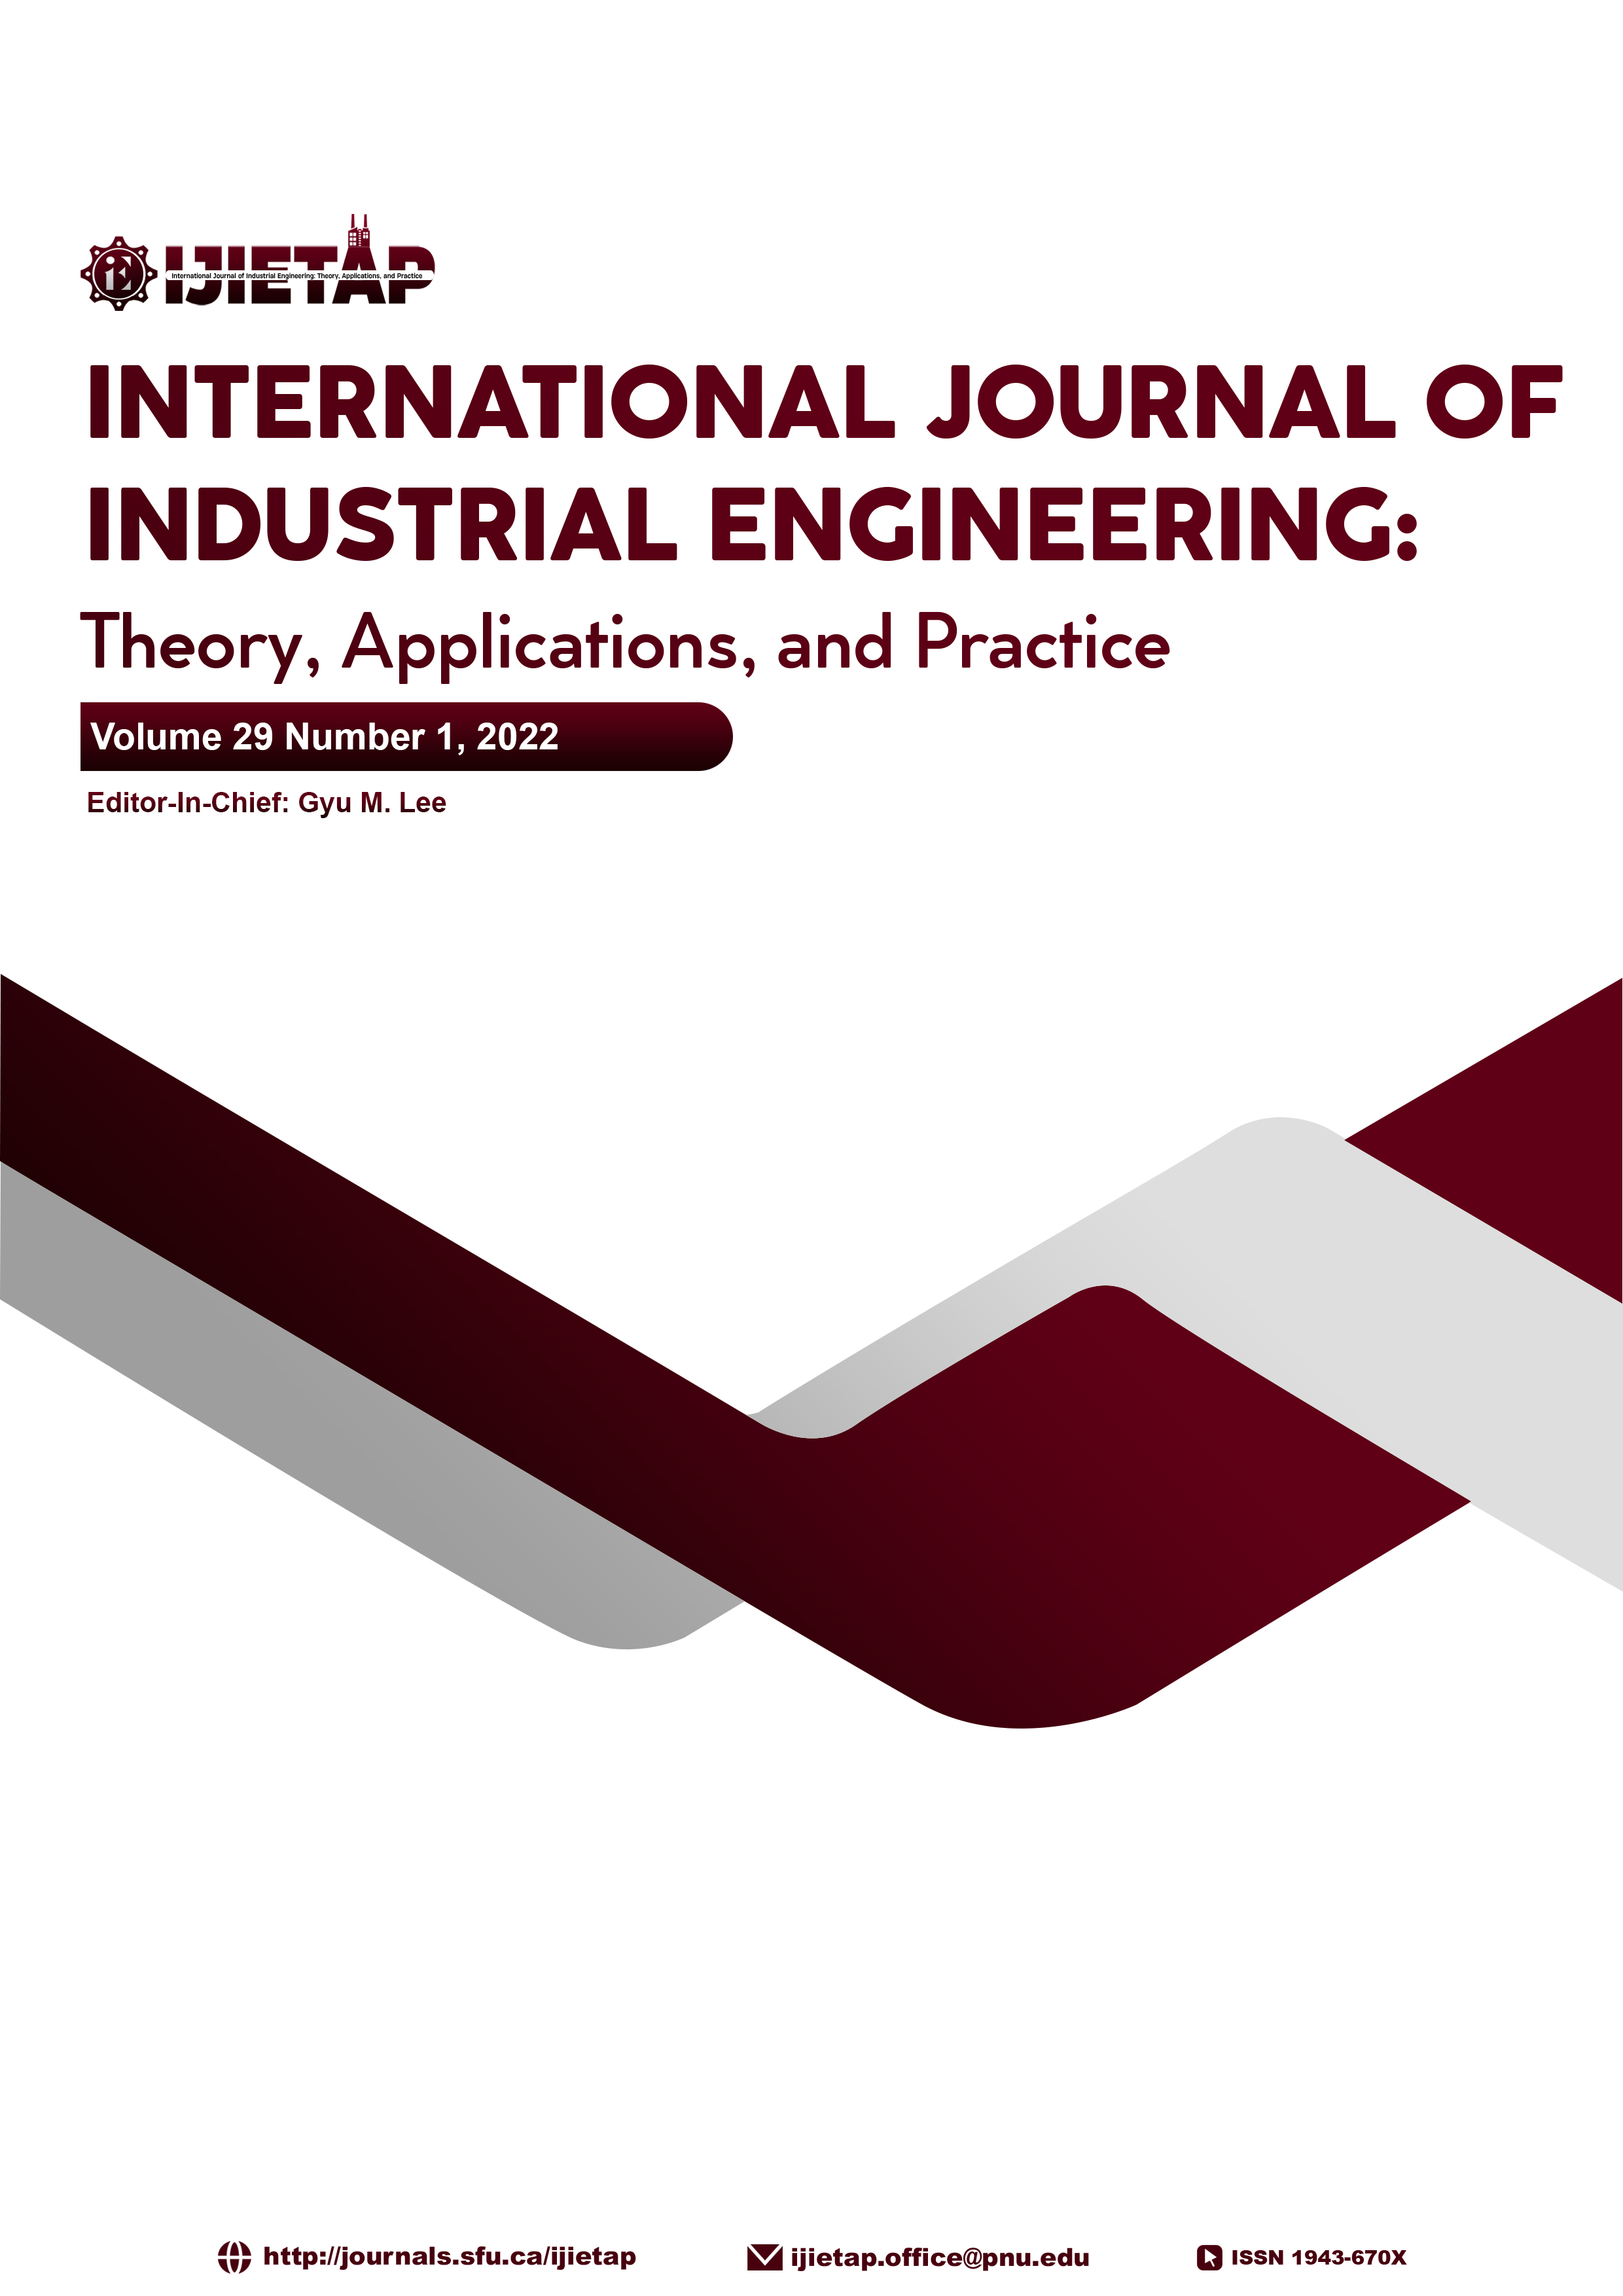 The International Journal of Industrial Engineering